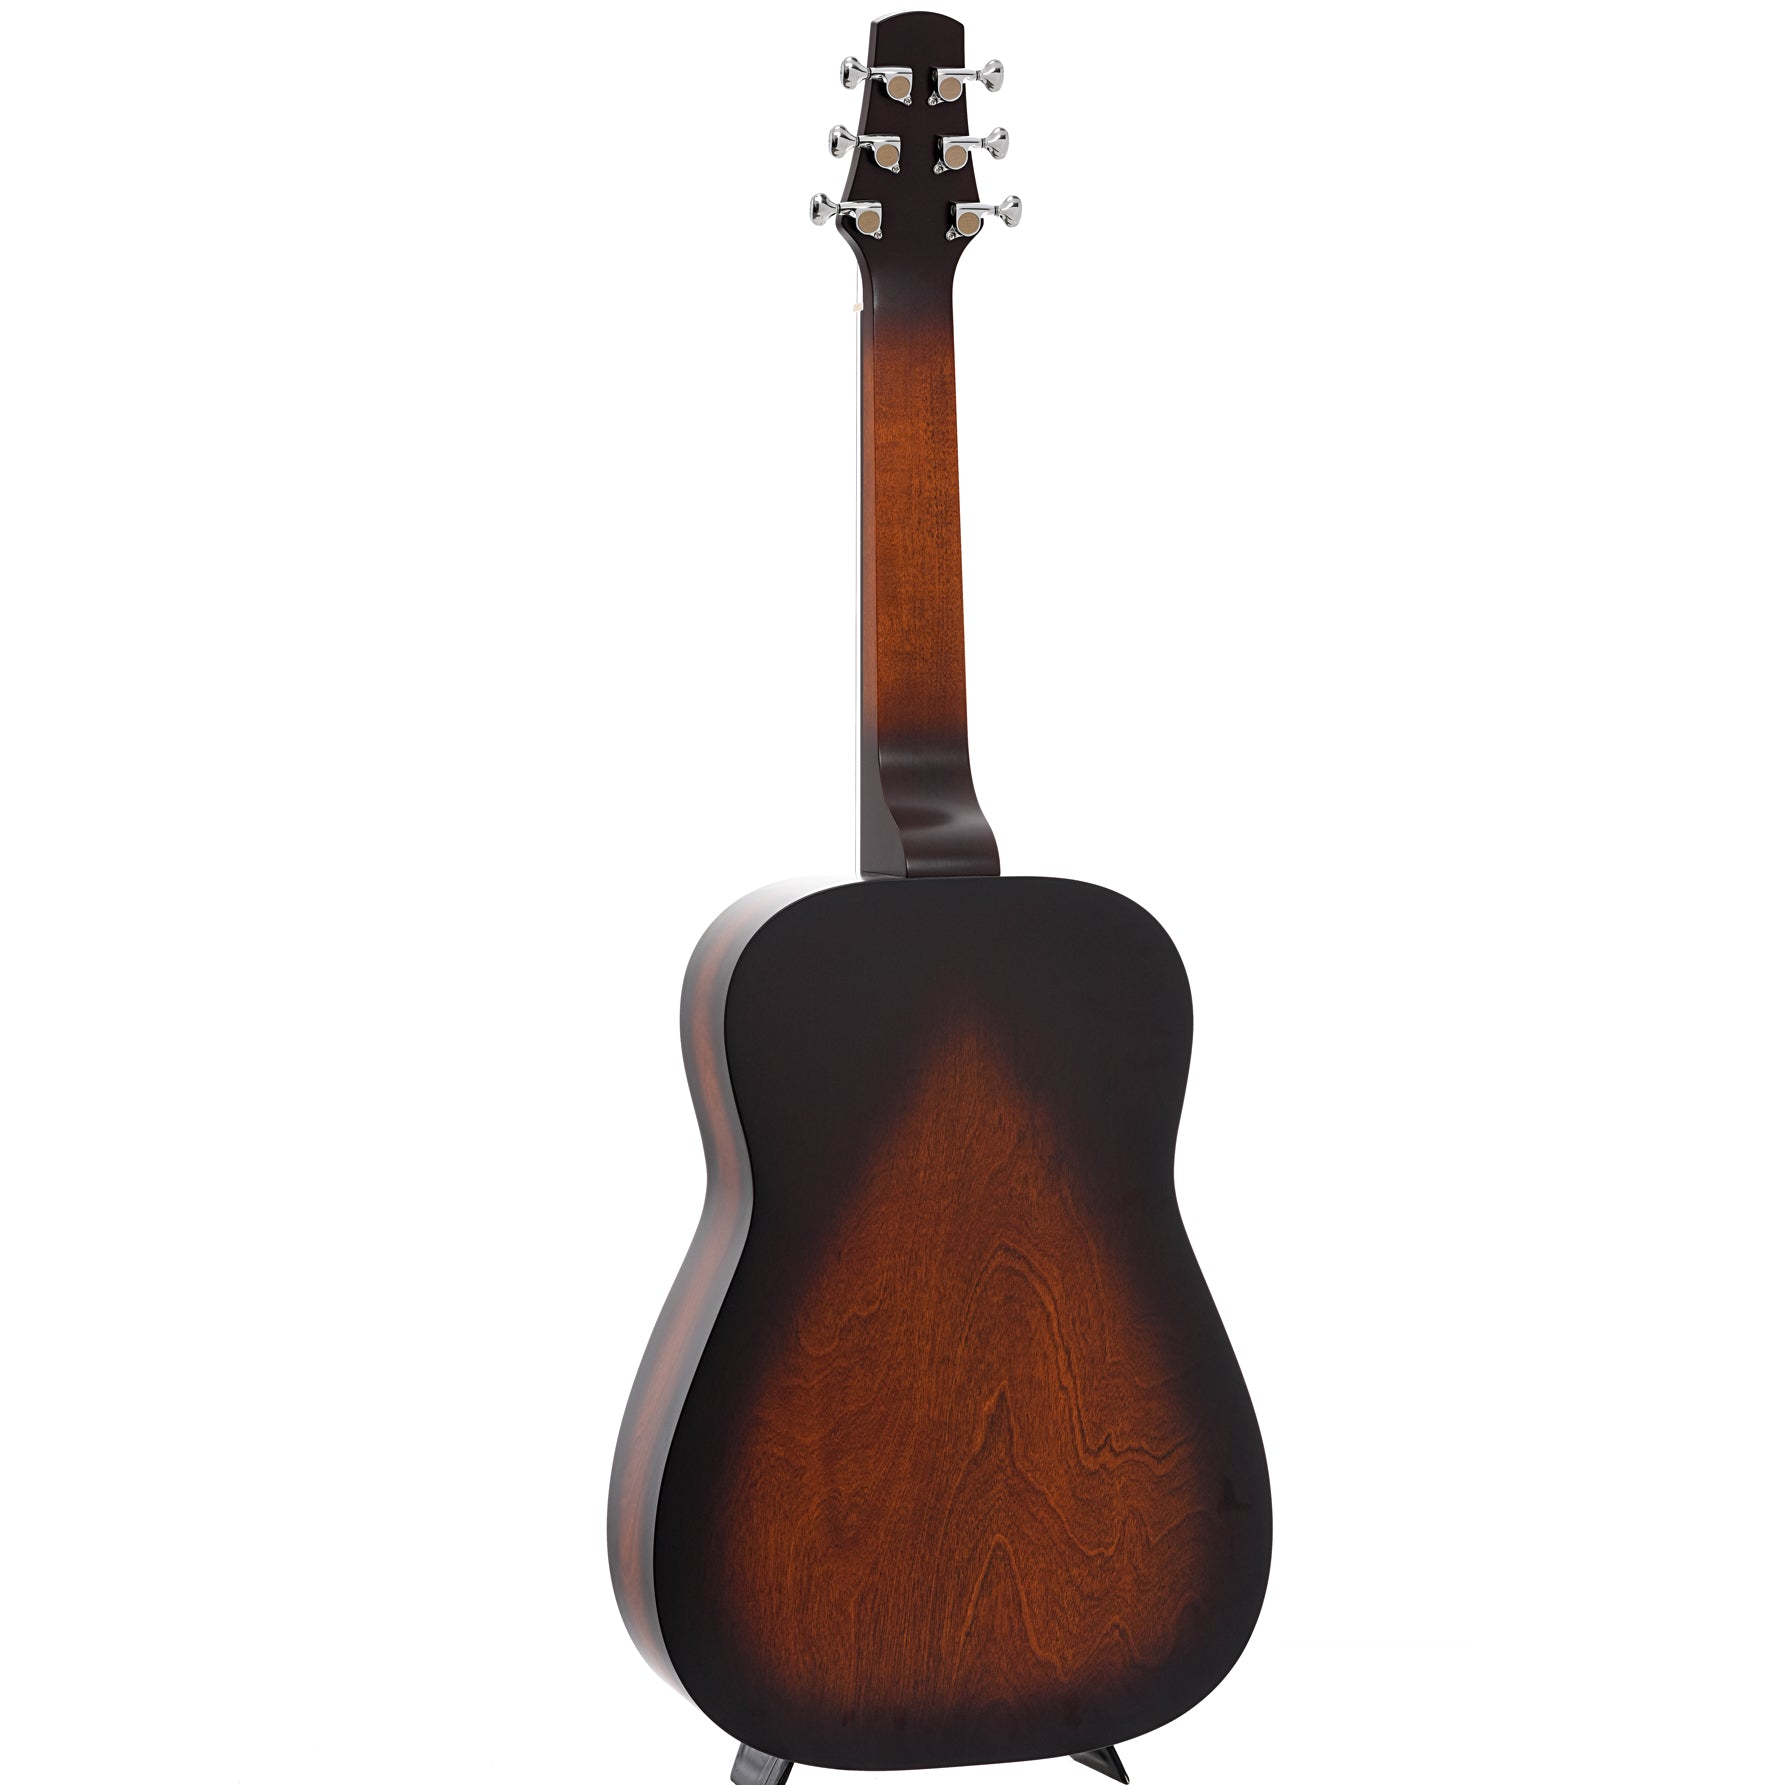 Full back and side of Beard Josh Swift Standard Squareneck Resonator Guitar with Signature Inlays